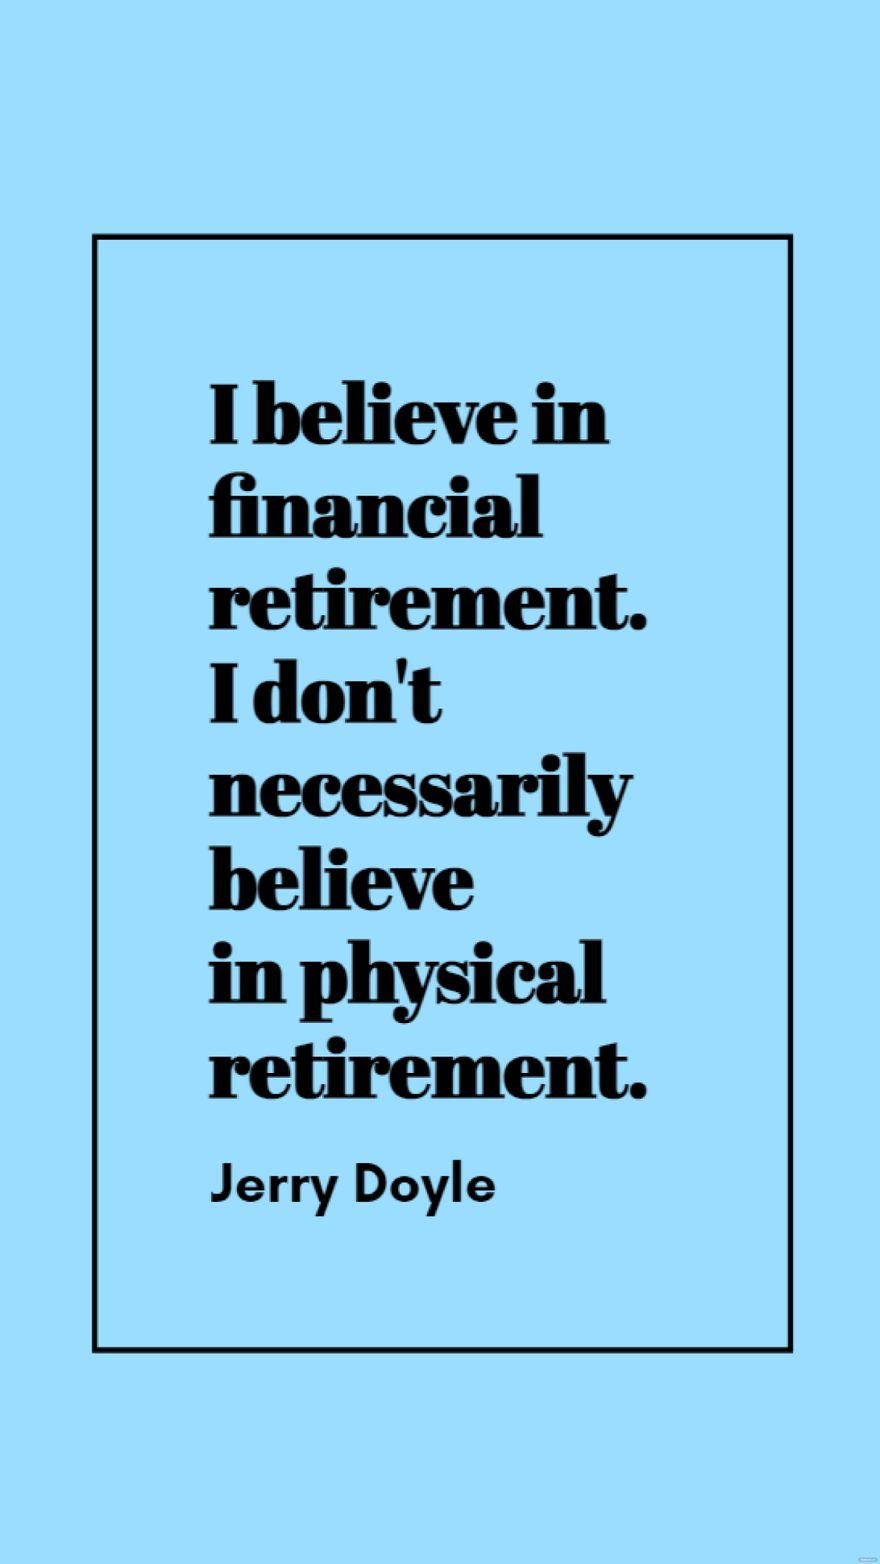 Jerry Doyle - I believe in financial retirement. I don't necessarily believe in physical retirement.